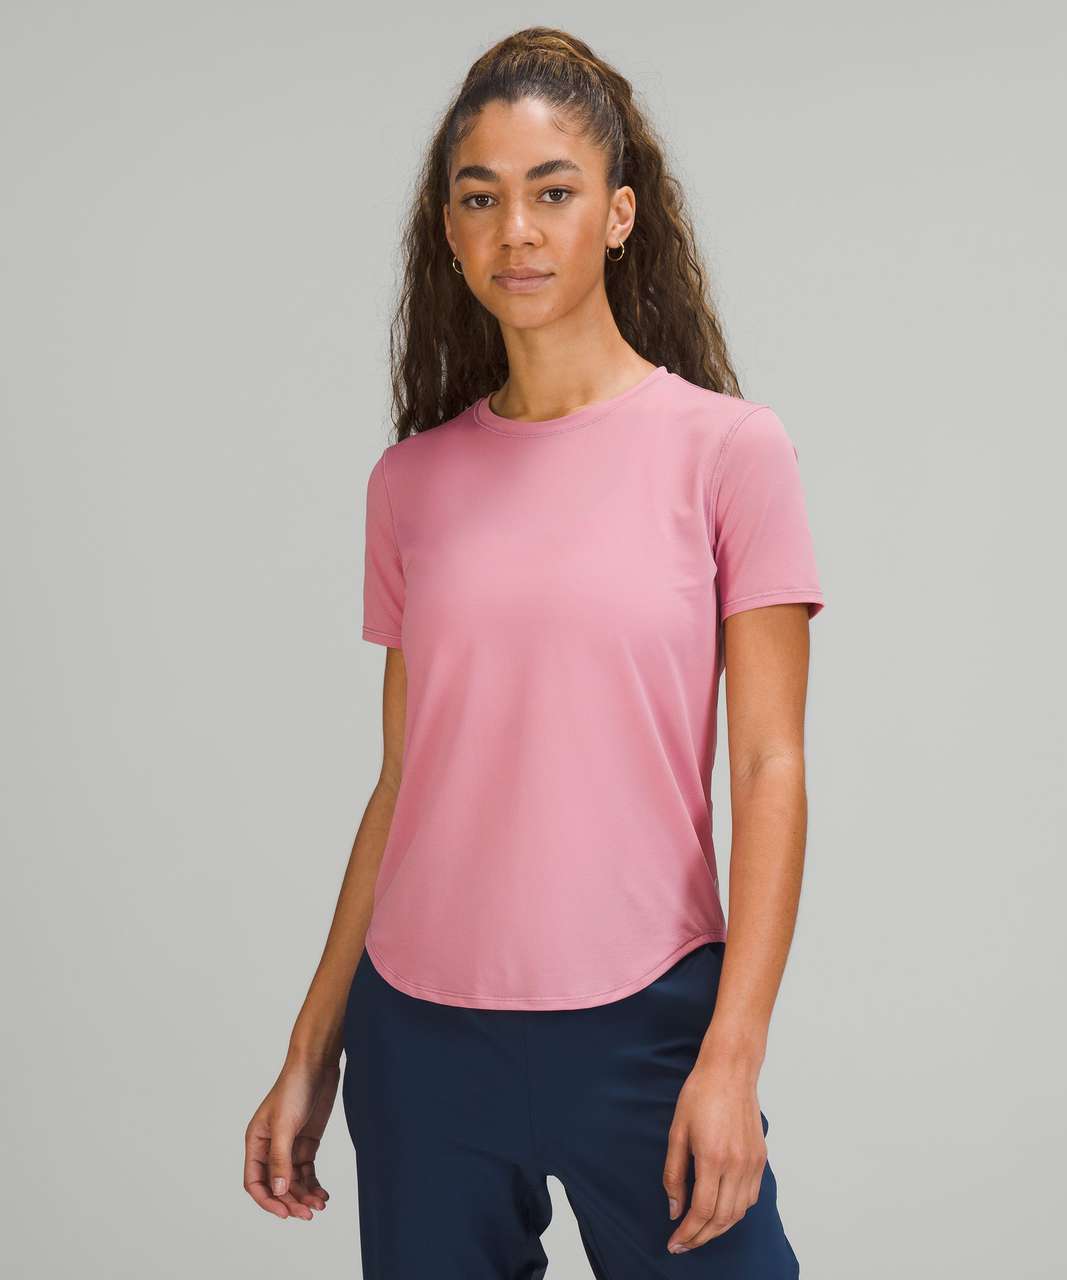 Lululemon High-Neck Running and Training T-Shirt - Pink Taupe